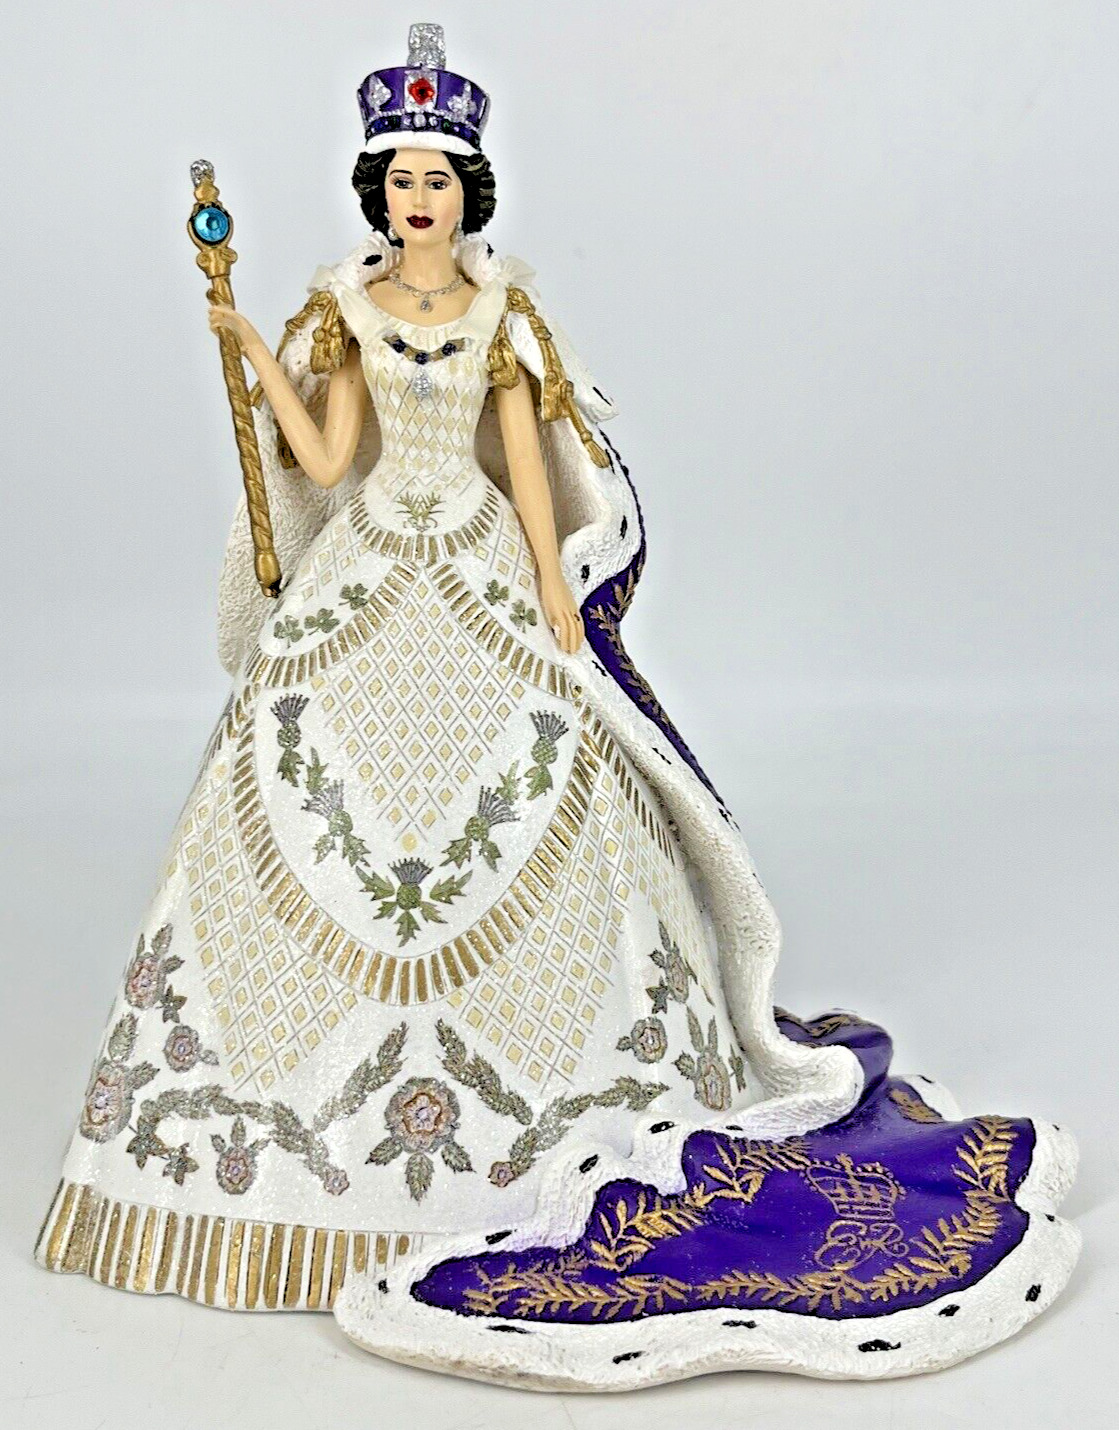 The Coronation of Queen Elizabeth II Figurine Hamilton Collection 2013 Numbered